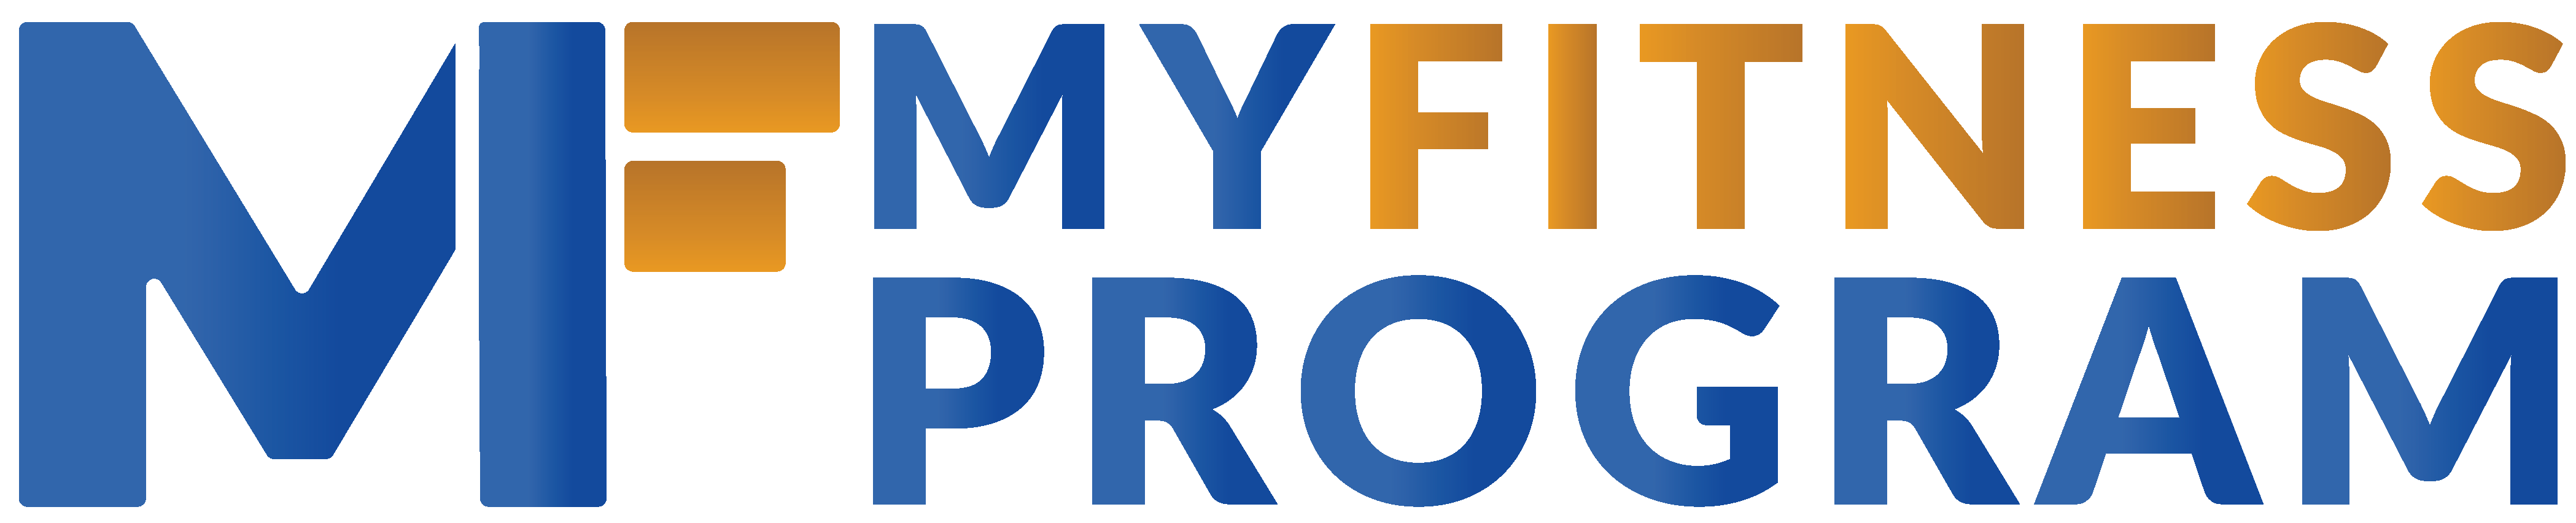 MFP Logo